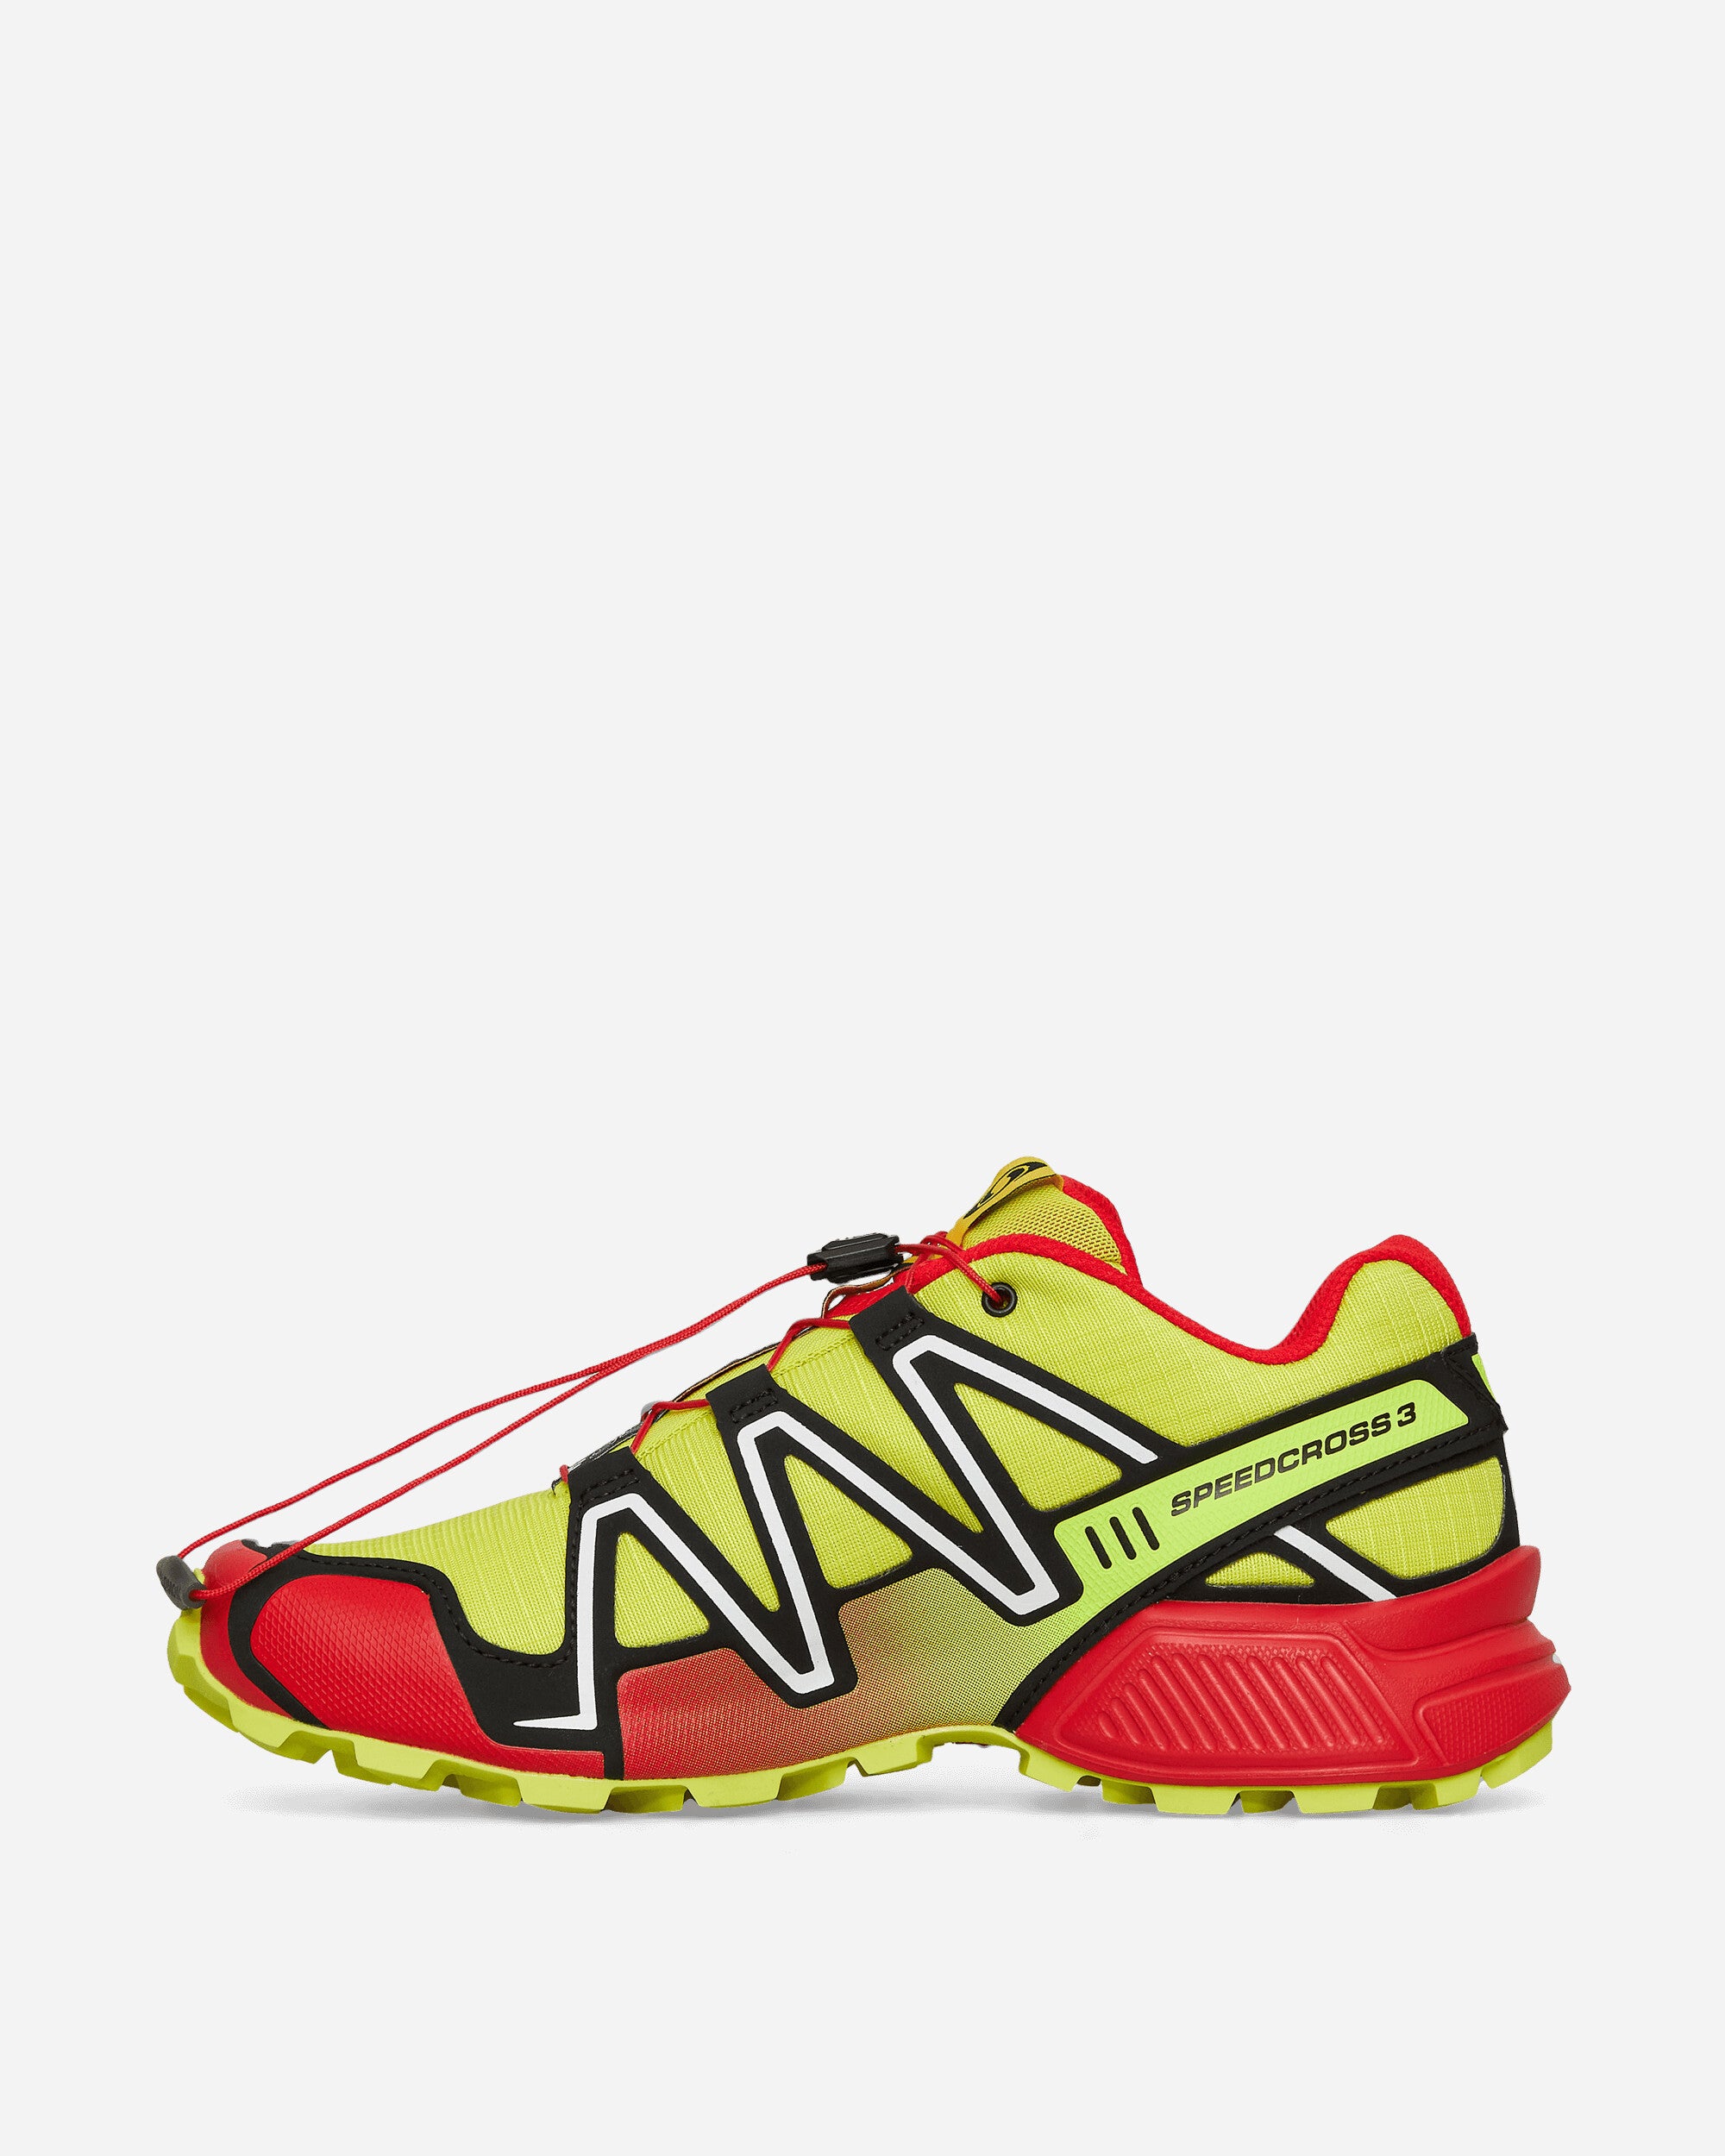 Salomon Speedcross 3 Sulphur Spring/High Risk Red Sneakers Low L47493600